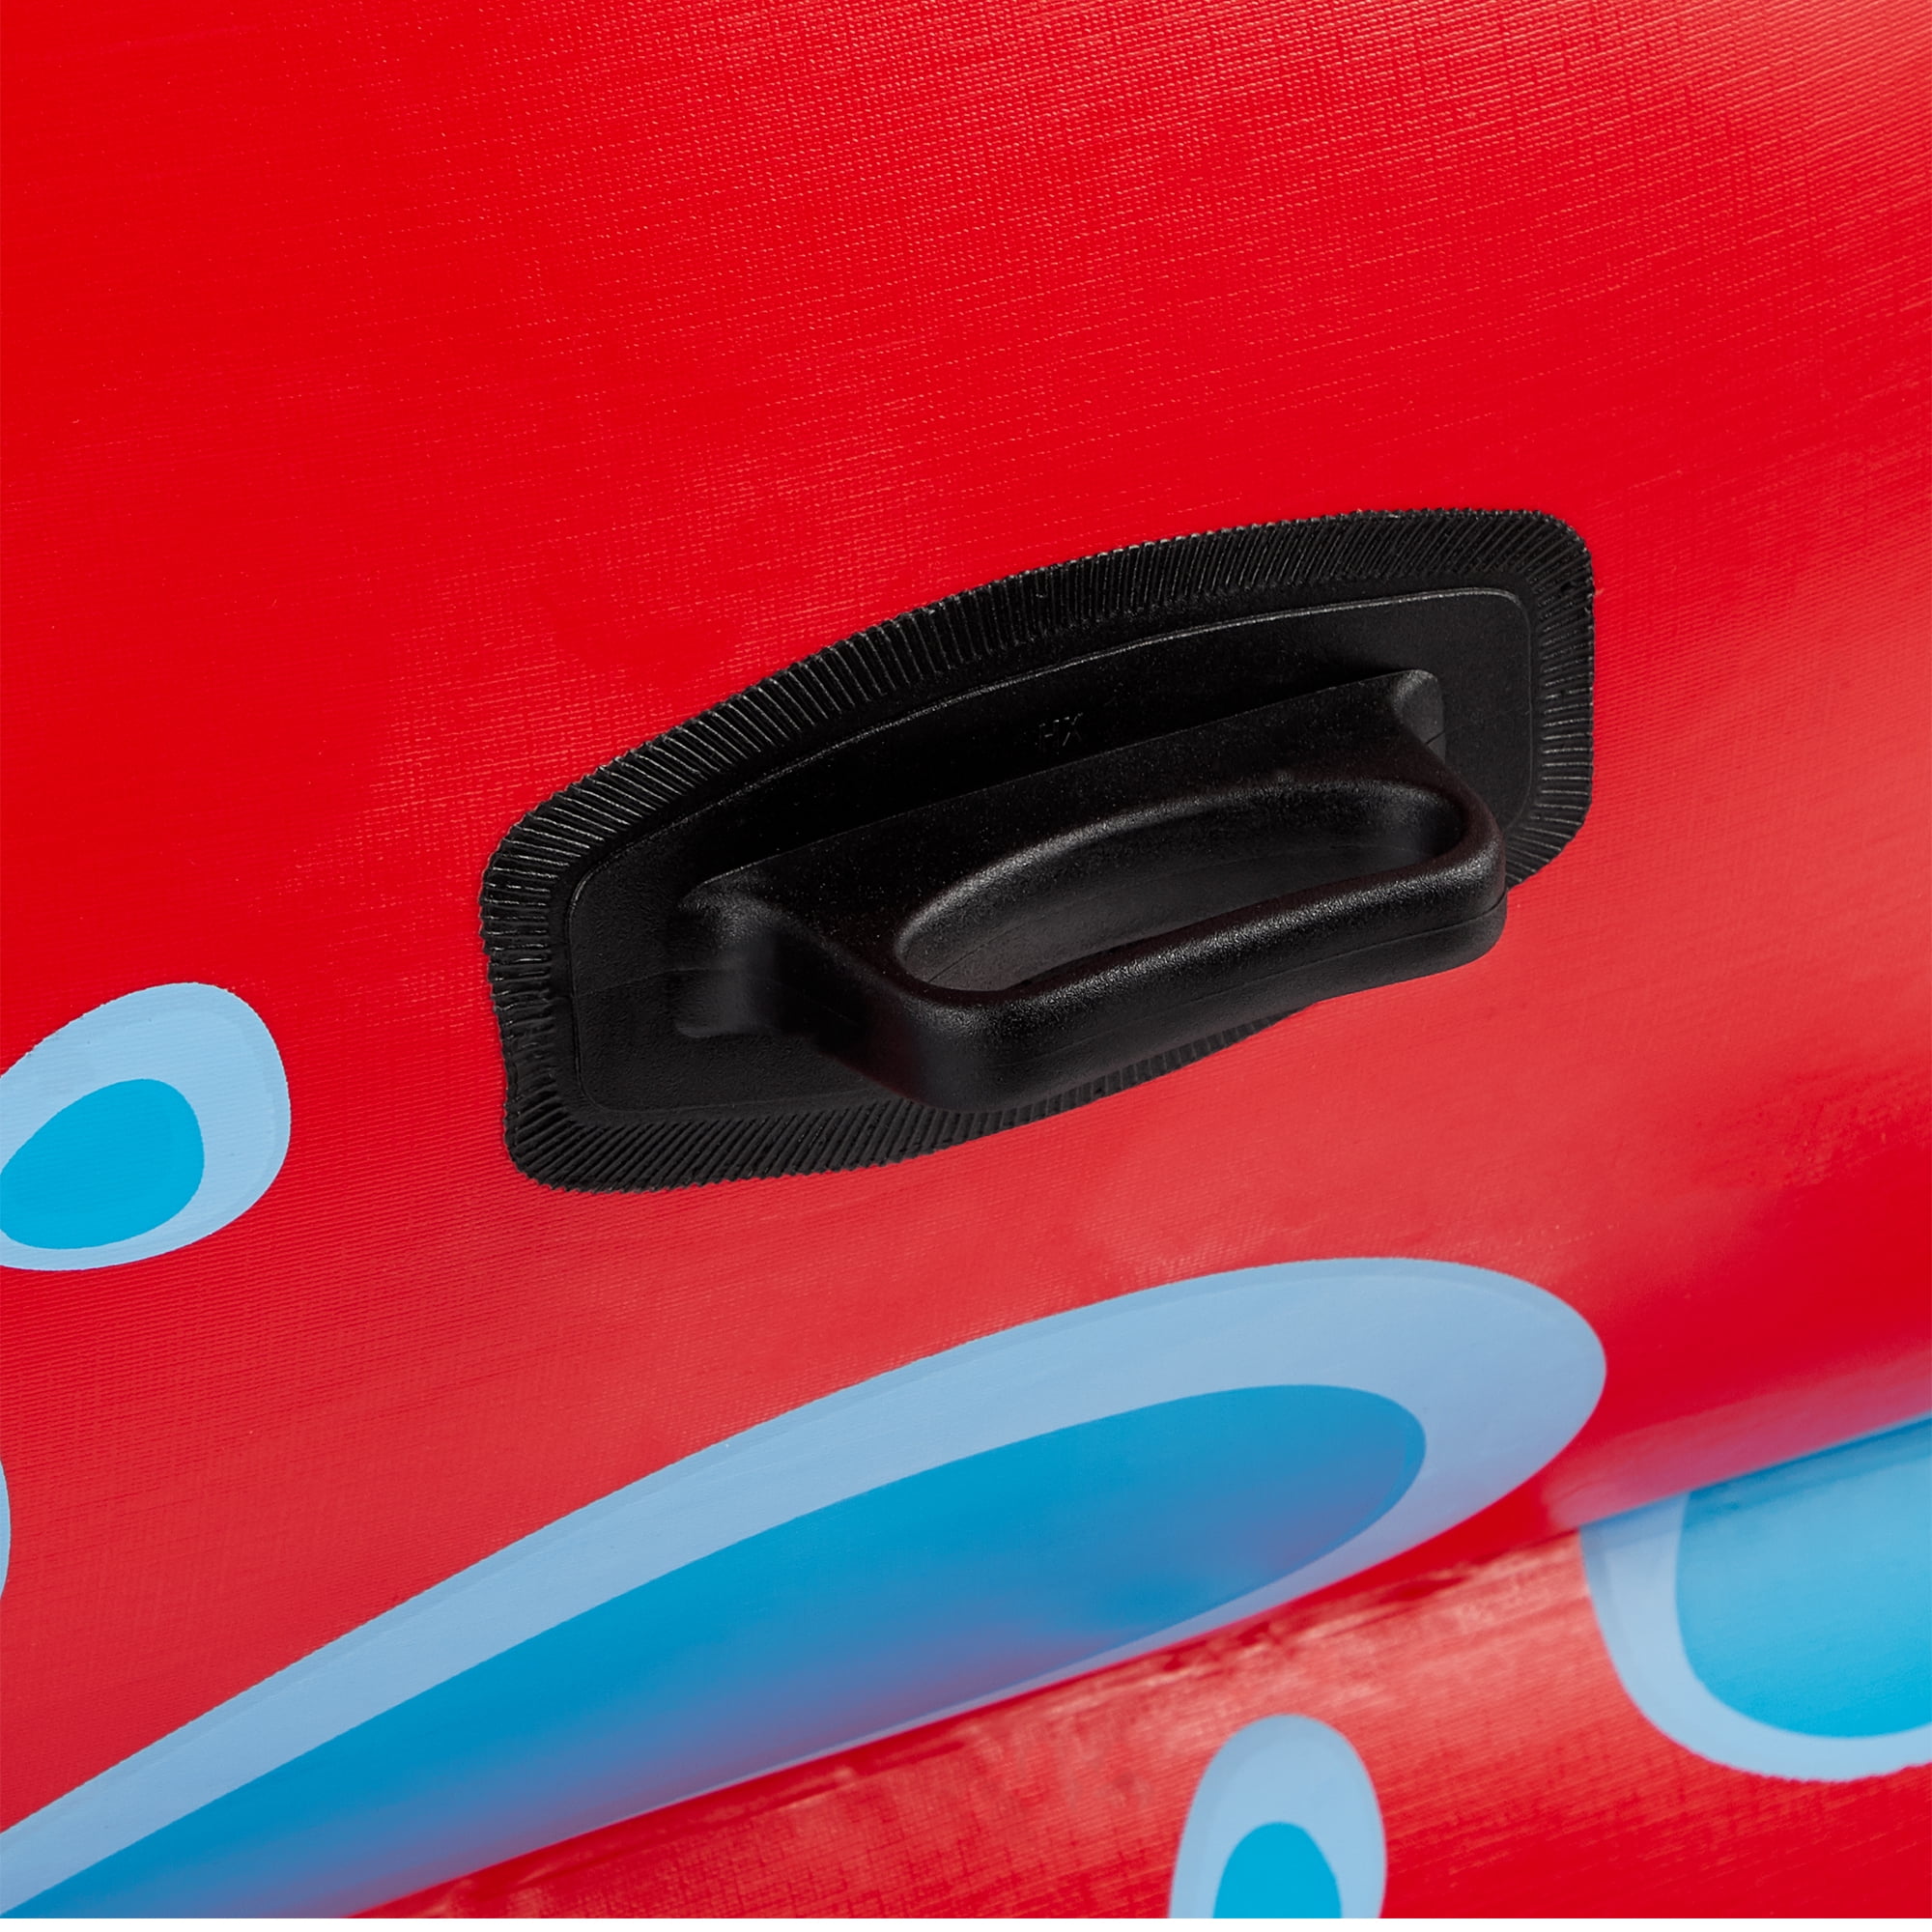 Intex Kool Splash Inflatable Pool Water Slide Play Center with Sprayer, Red 